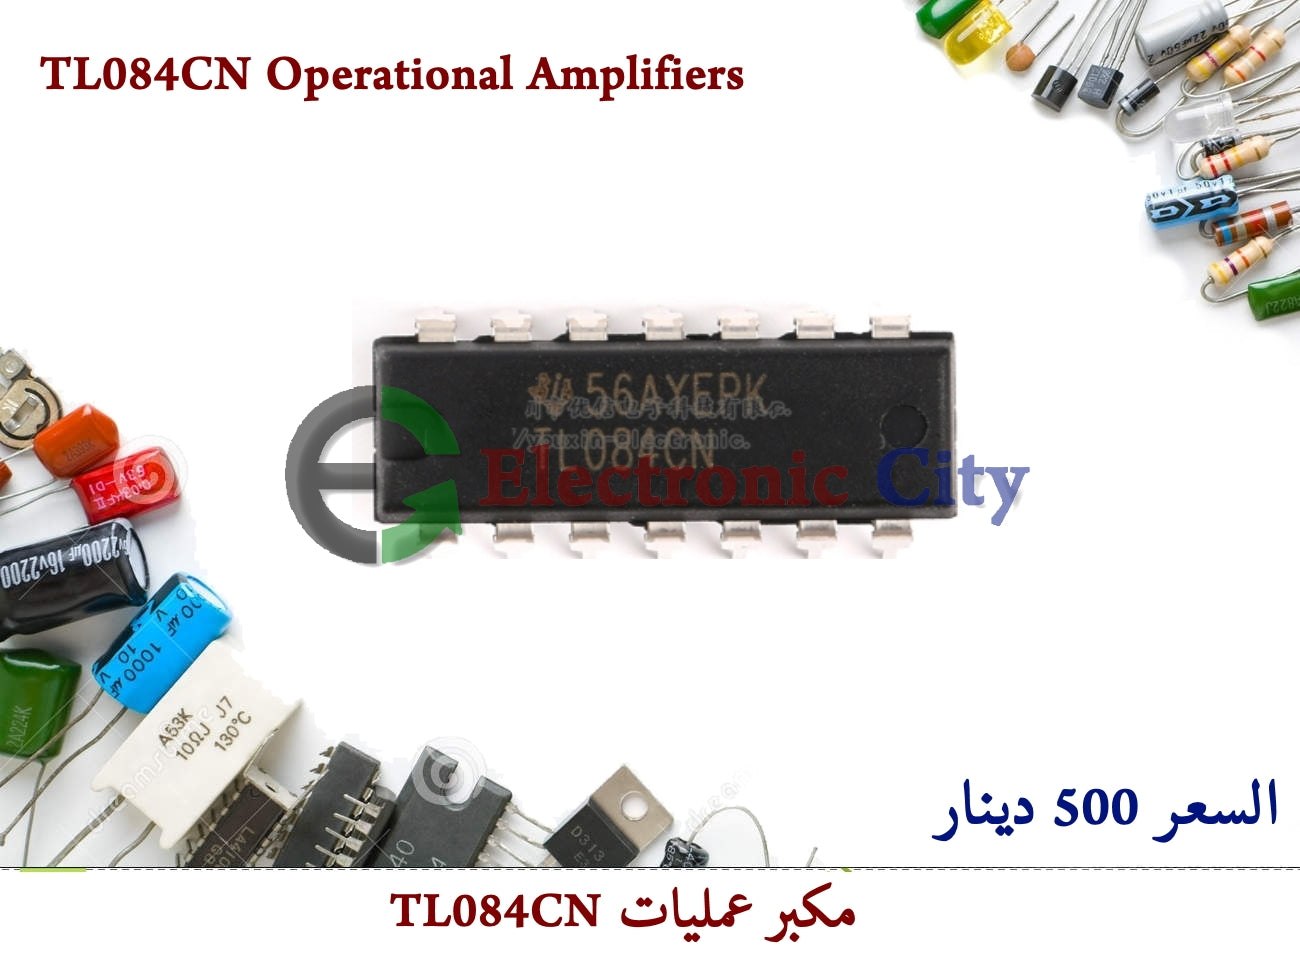 TL084CN Operational Amplifiers